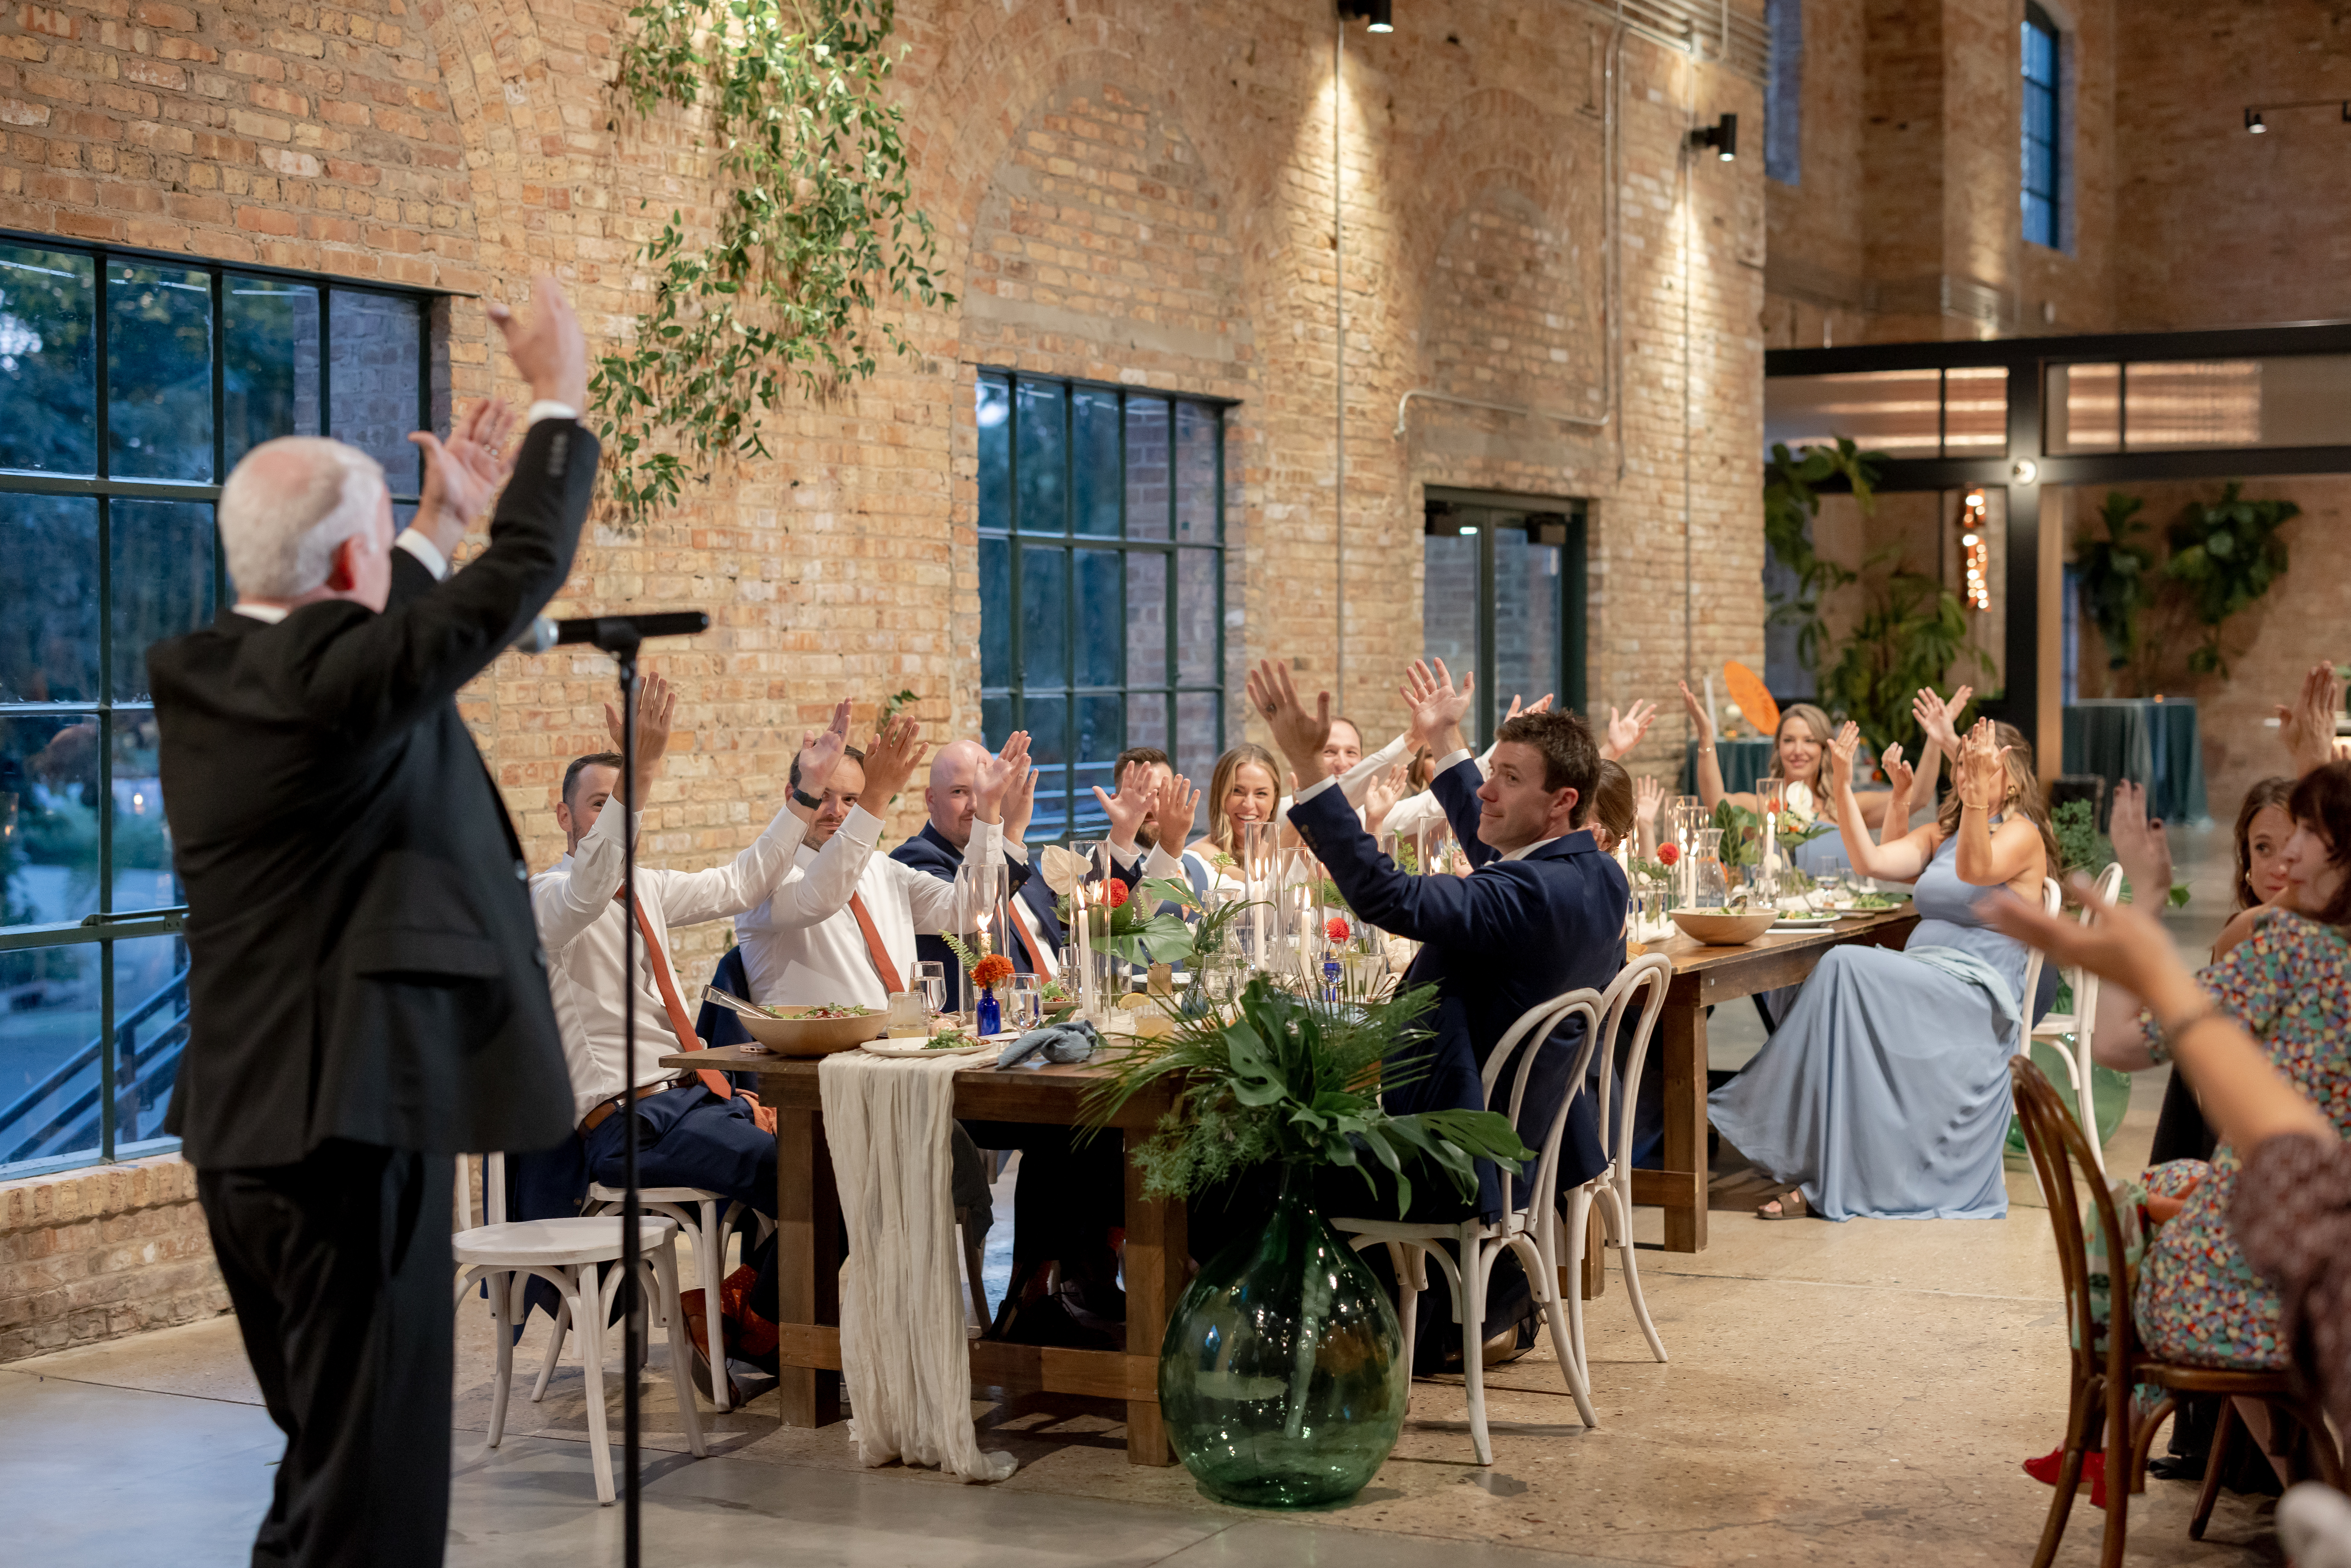 garver-feed-mill-wedding-reception-prayer